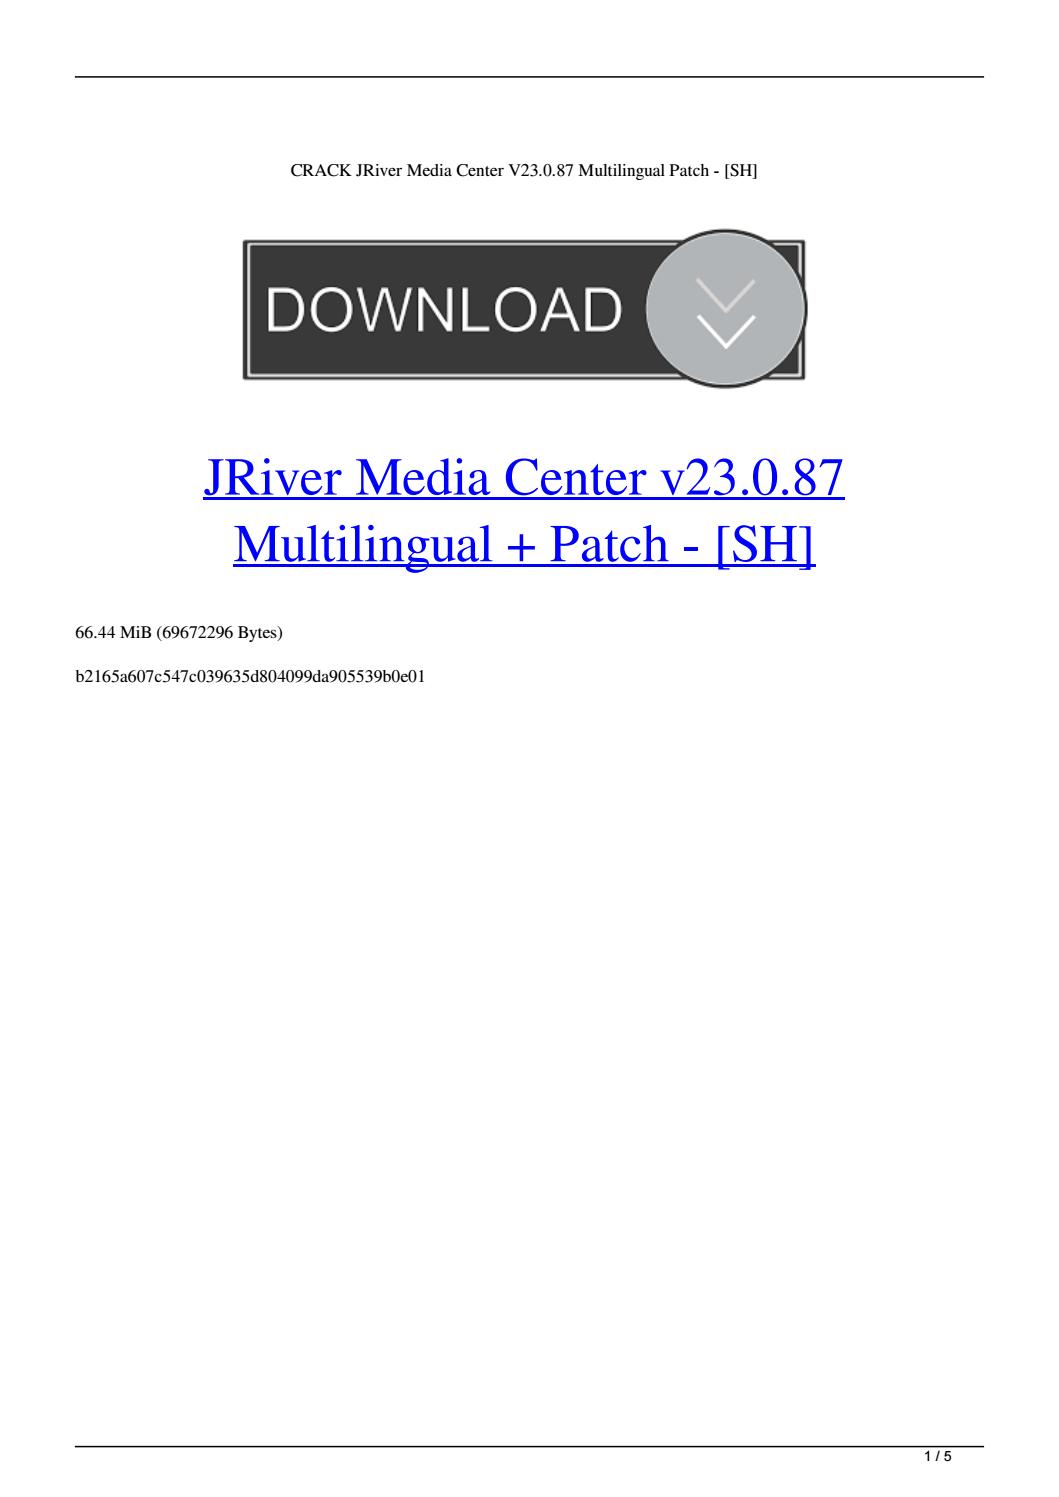 for android download JRiver Media Center 31.0.23